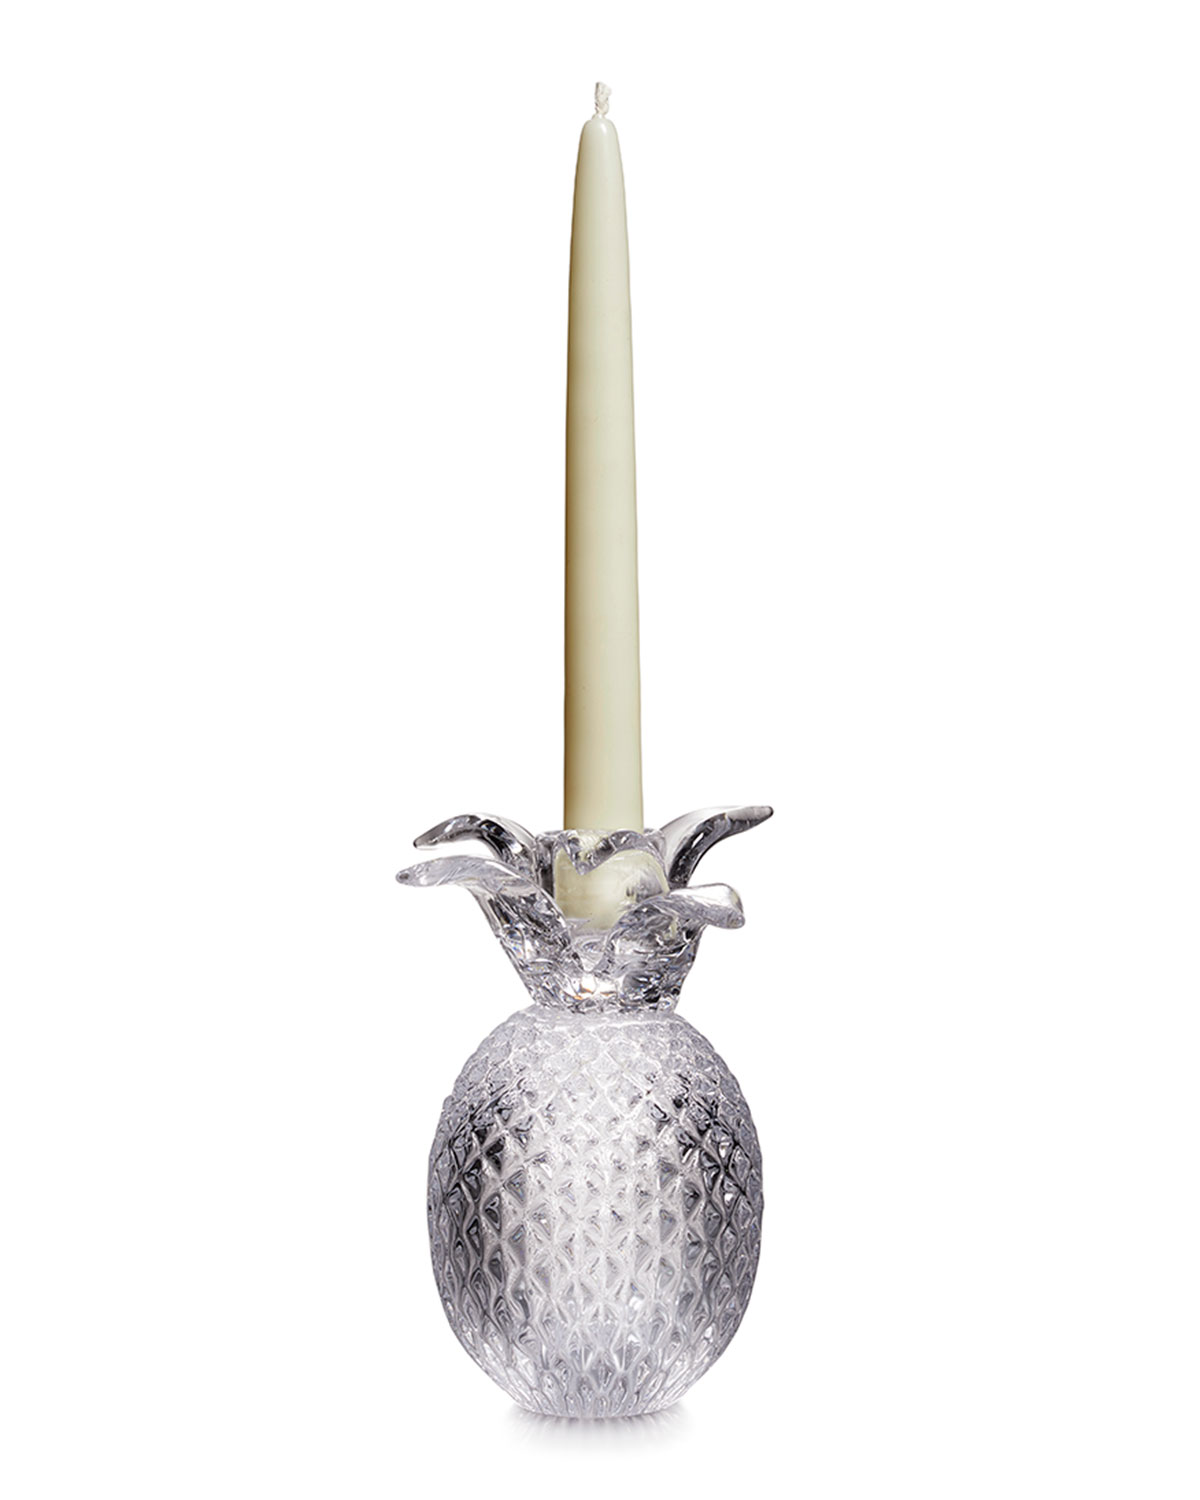 Glass Pineapple Candlestick Holder